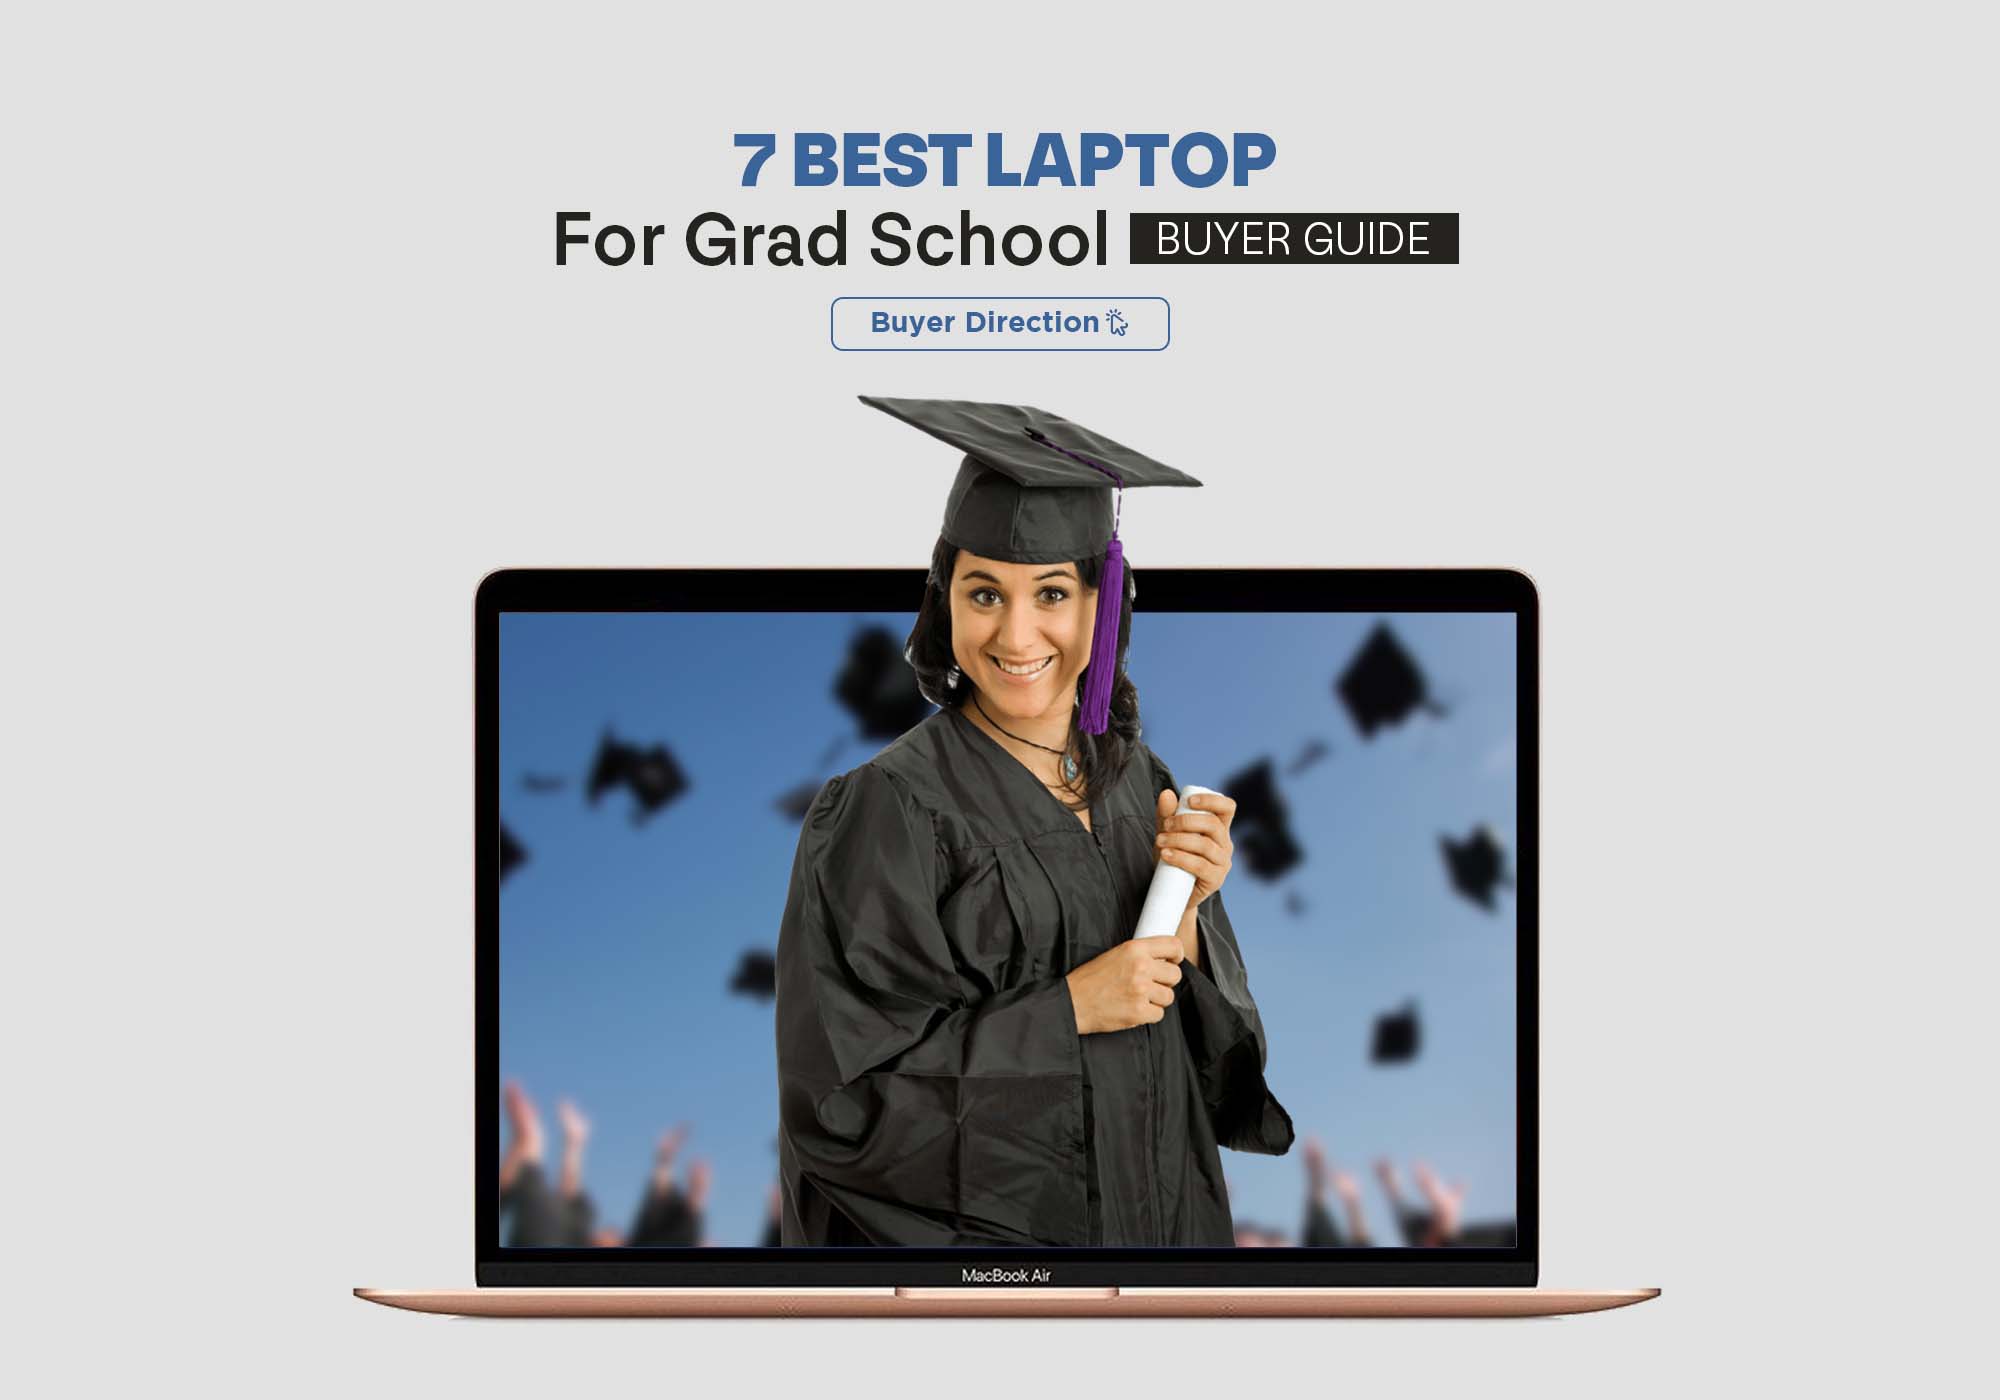 7 Best Laptops For Grad School - Buyer Guide